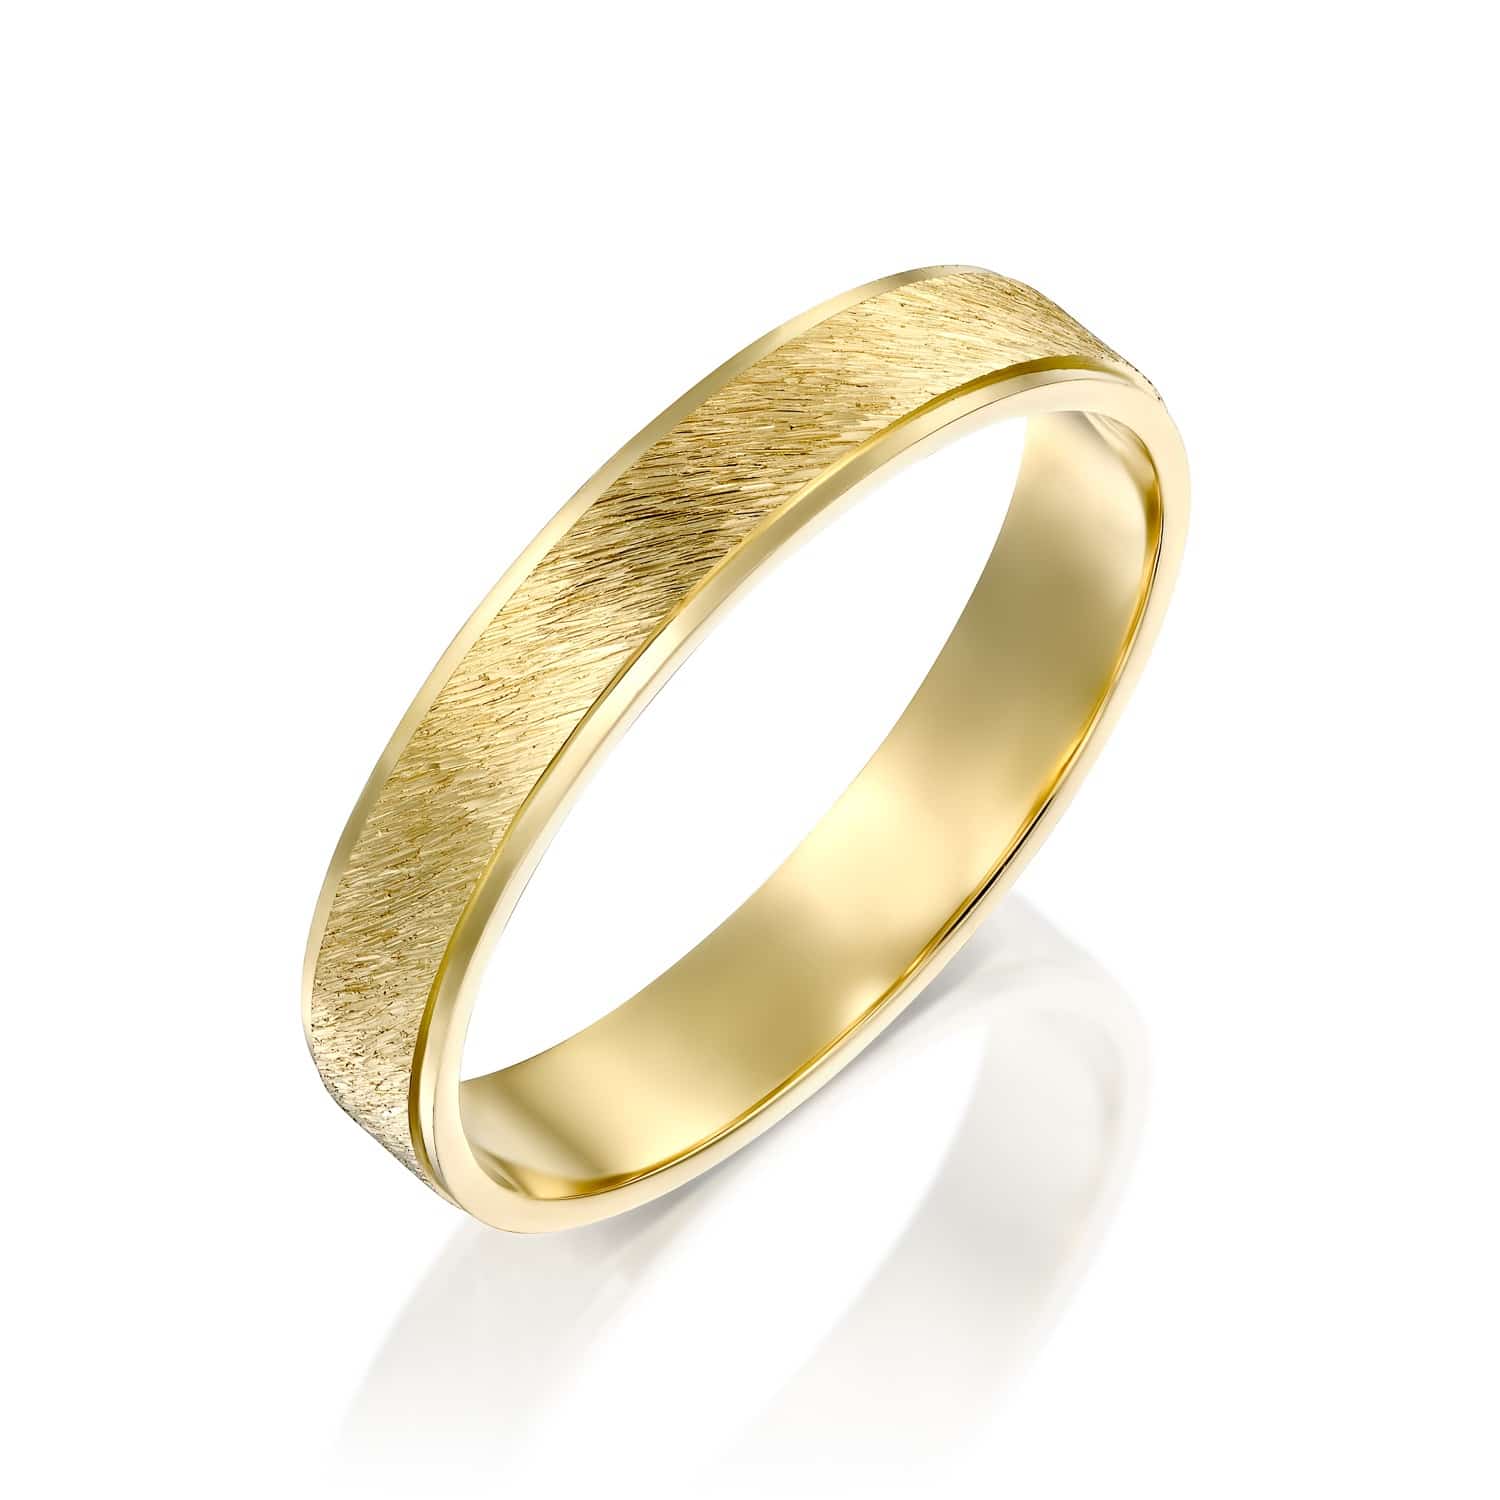 Observe bowl Incessant טבעת נישואין לגבר לואיס | מאור תכשיטים – טבעות אירוסין מיוחדות, טבעות  נישואין